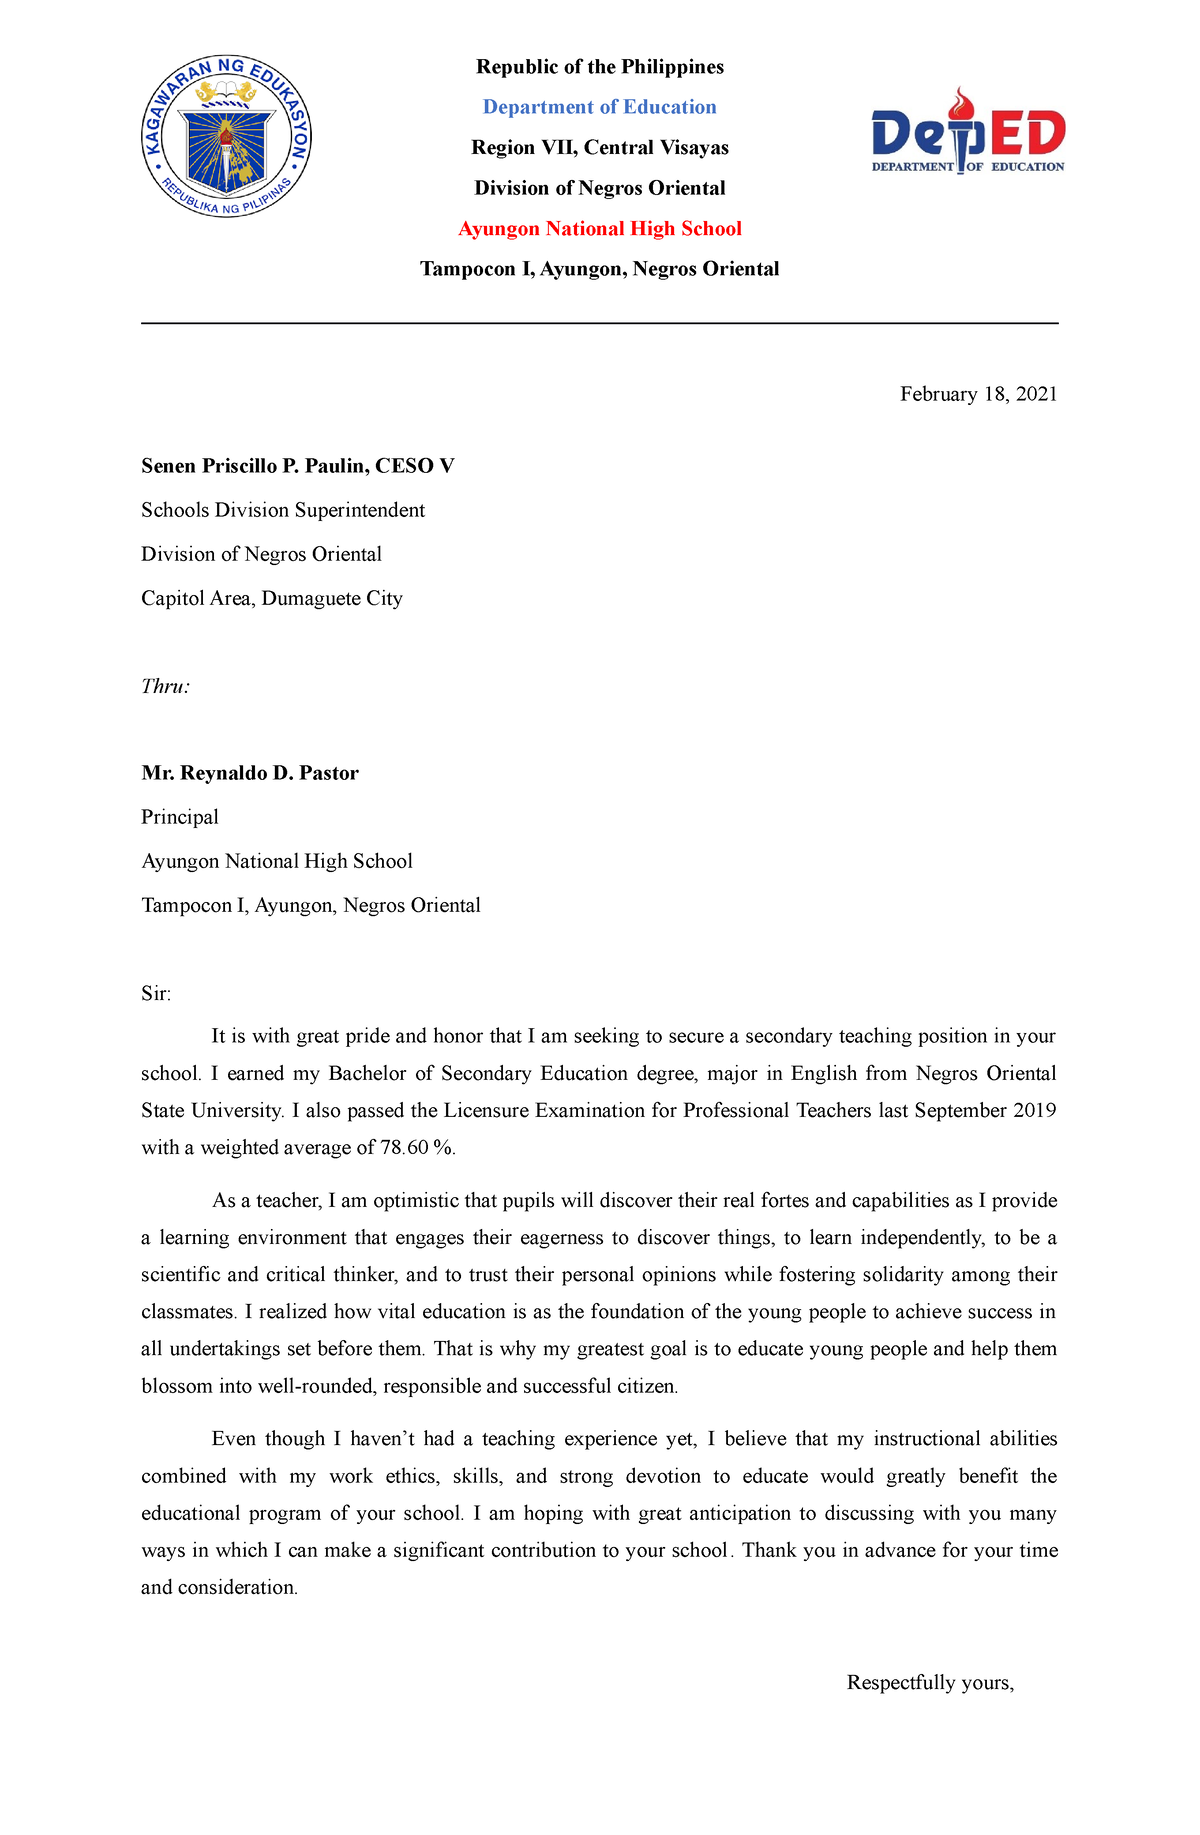 application letter for head teacher position deped